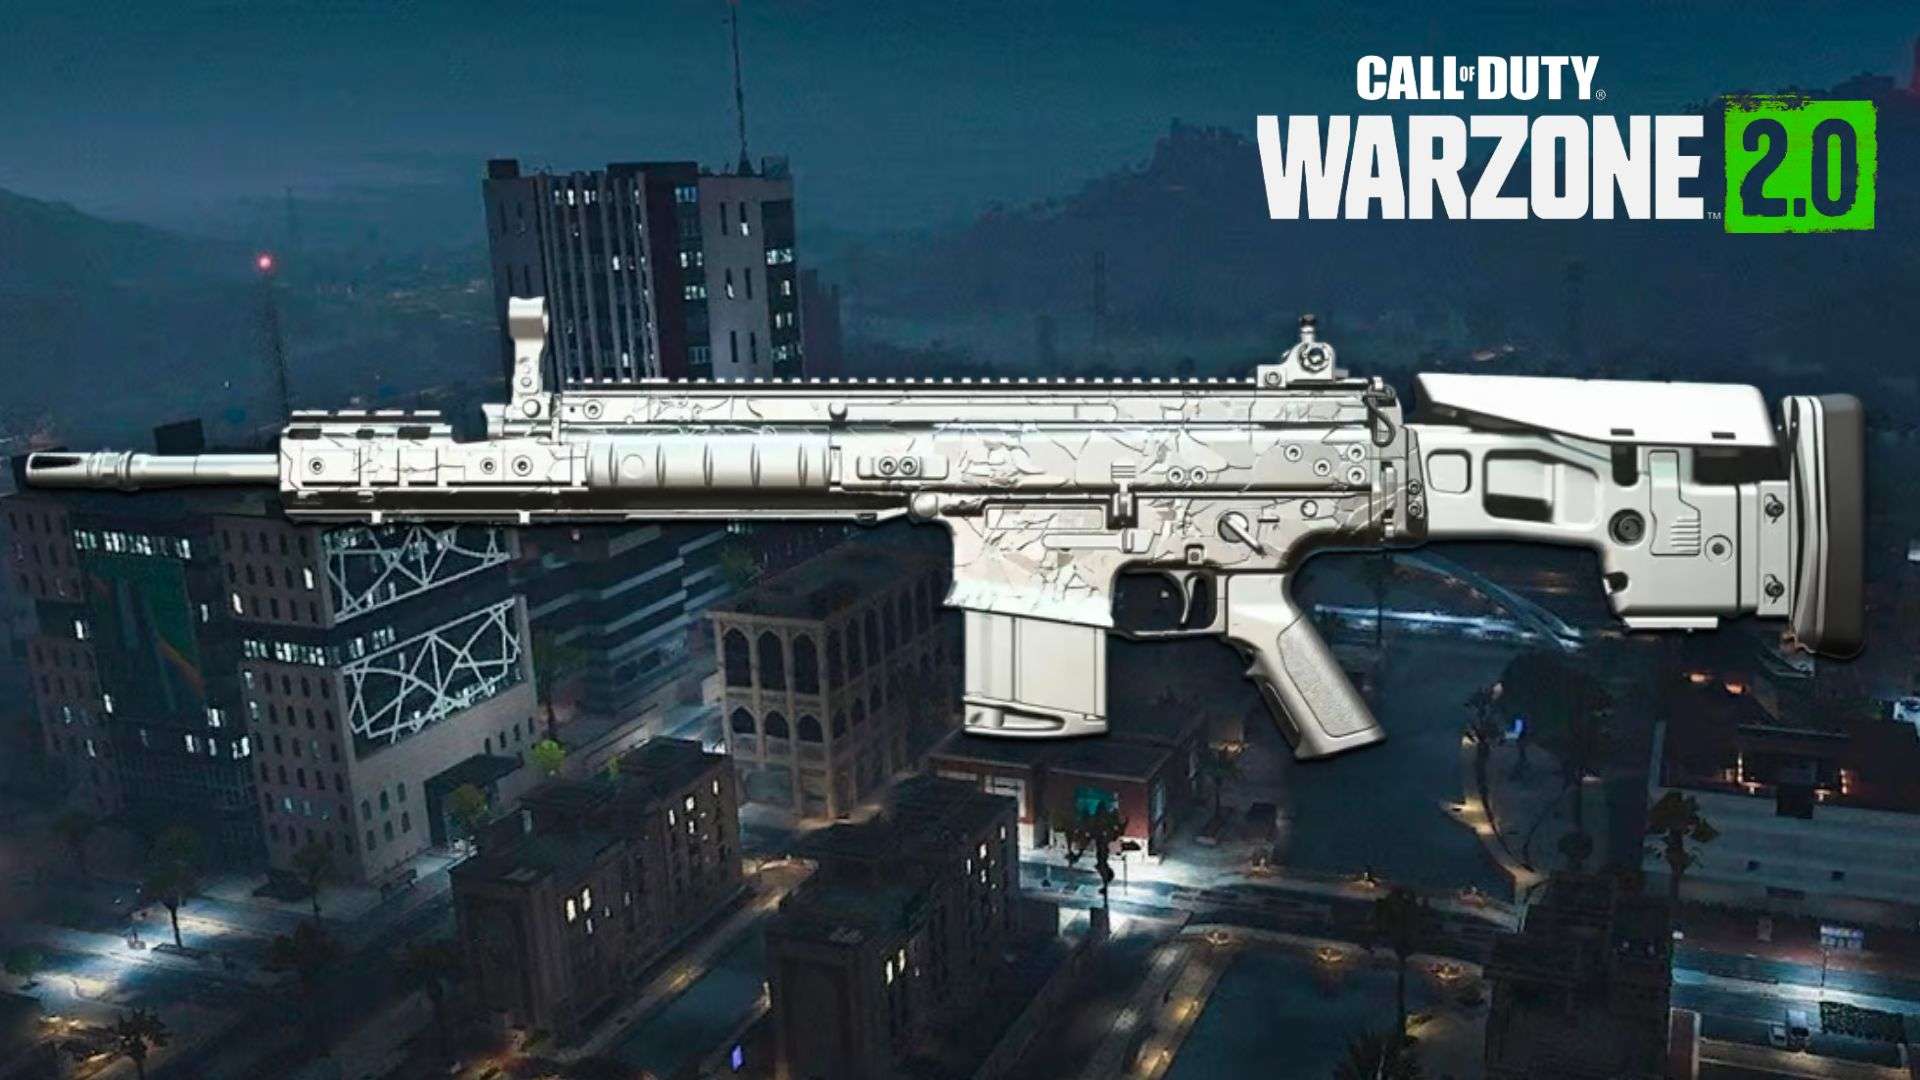 Silver TAQ-M rifle in Warzone